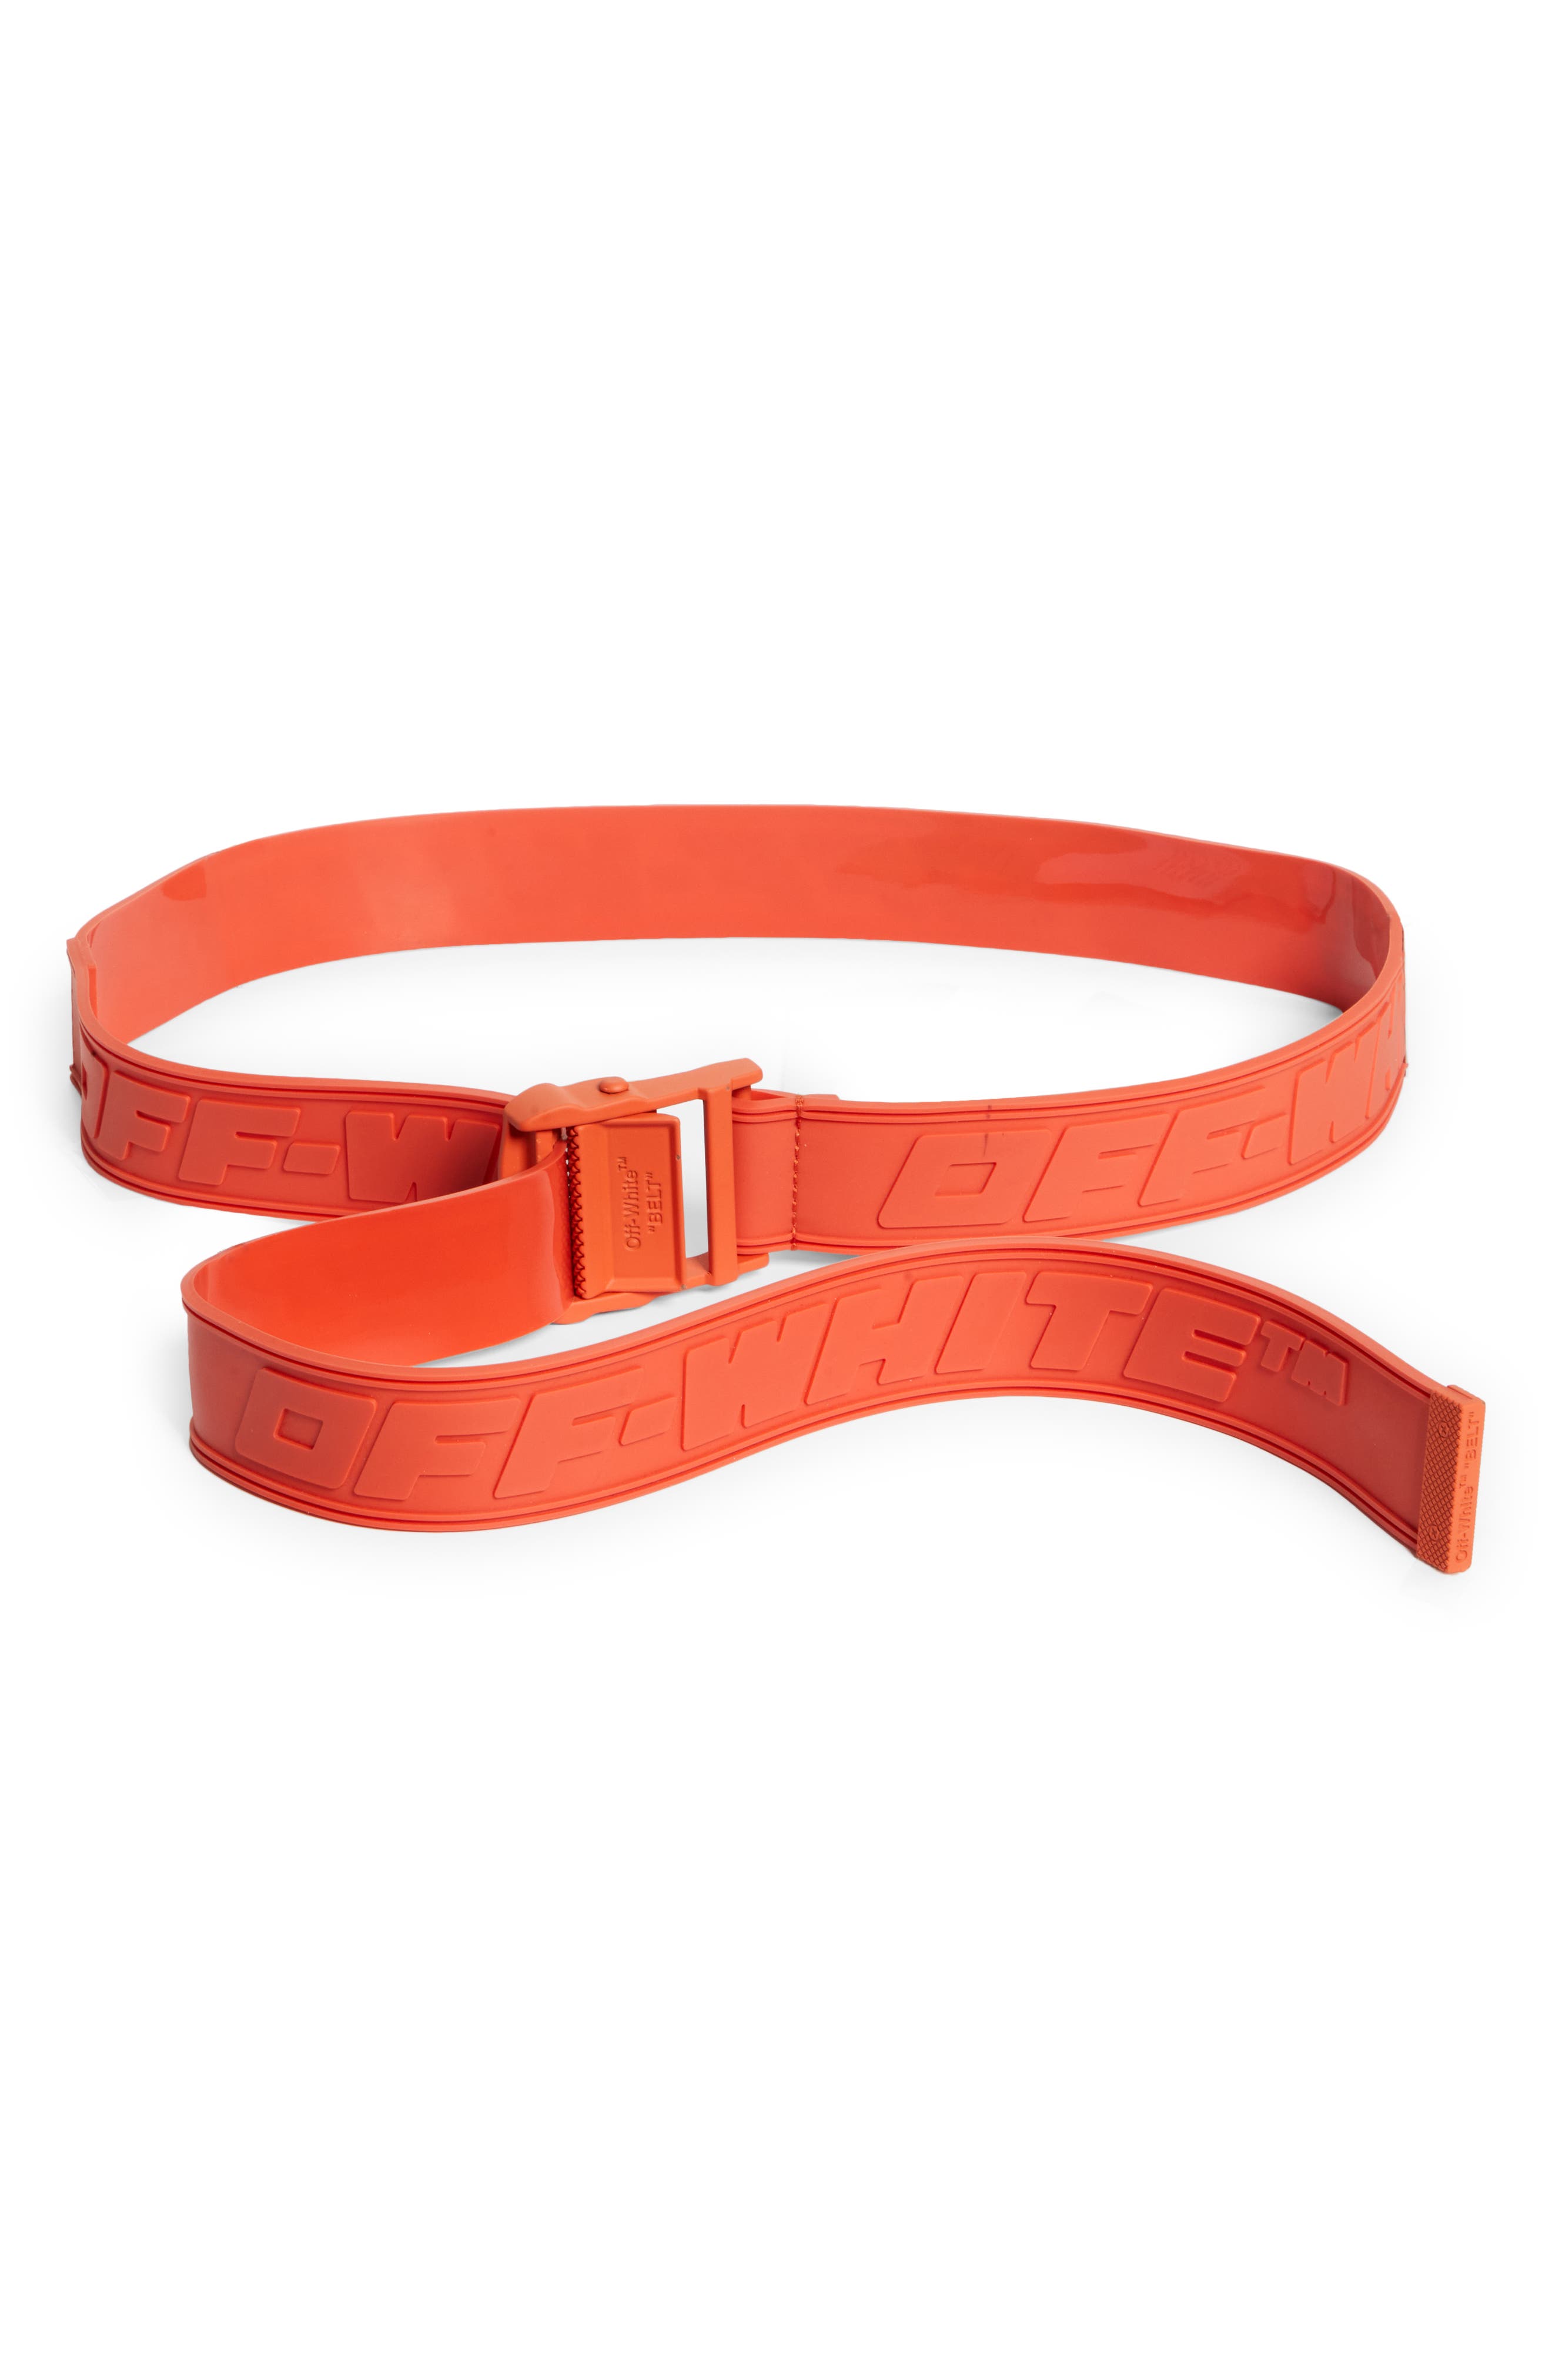 off-white orange belt | www.carmenundmelanie.at